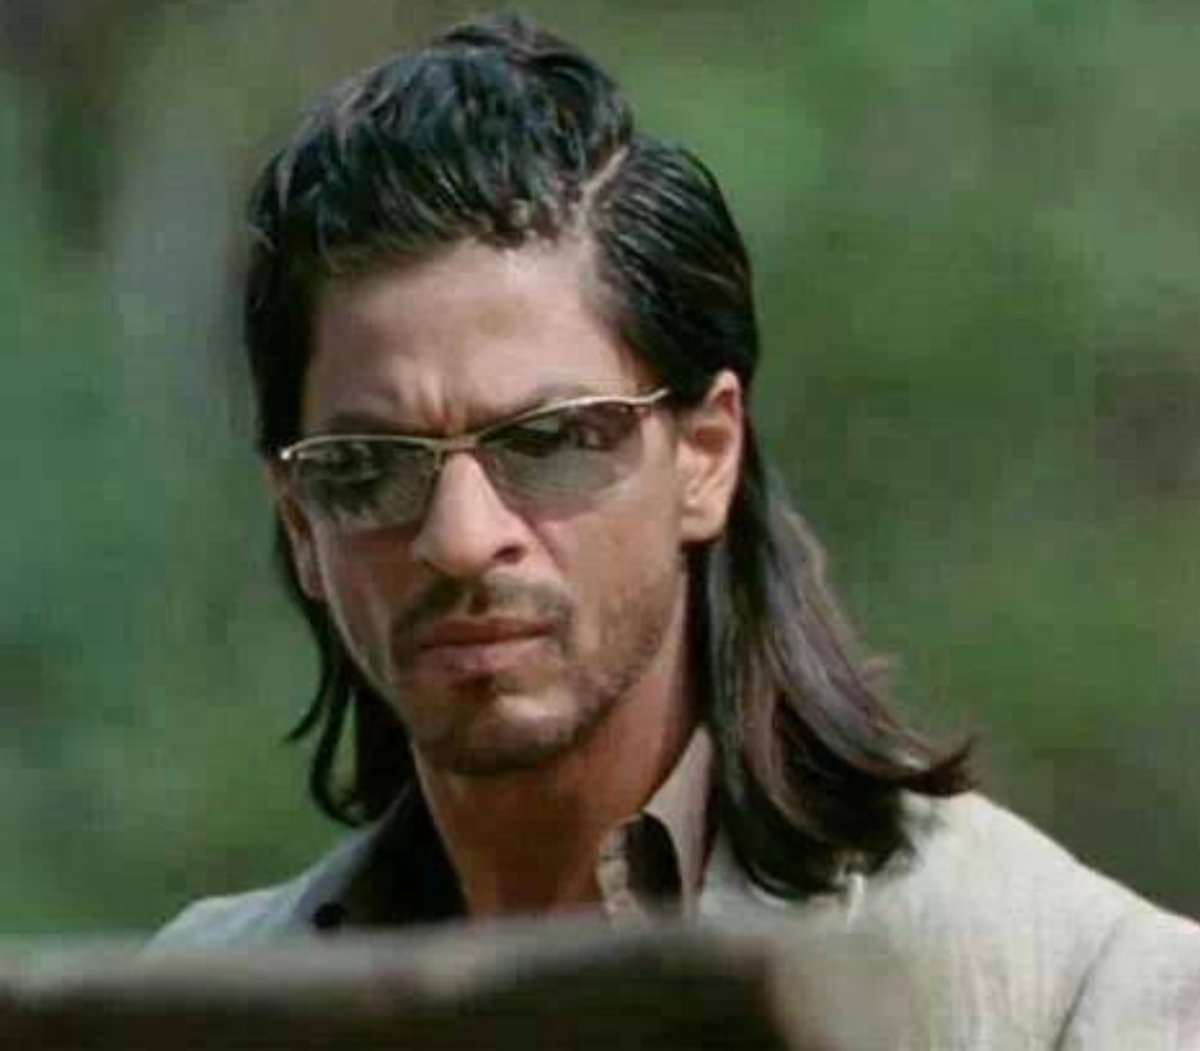 Sneak-a-peek at SRK's new hairstyle